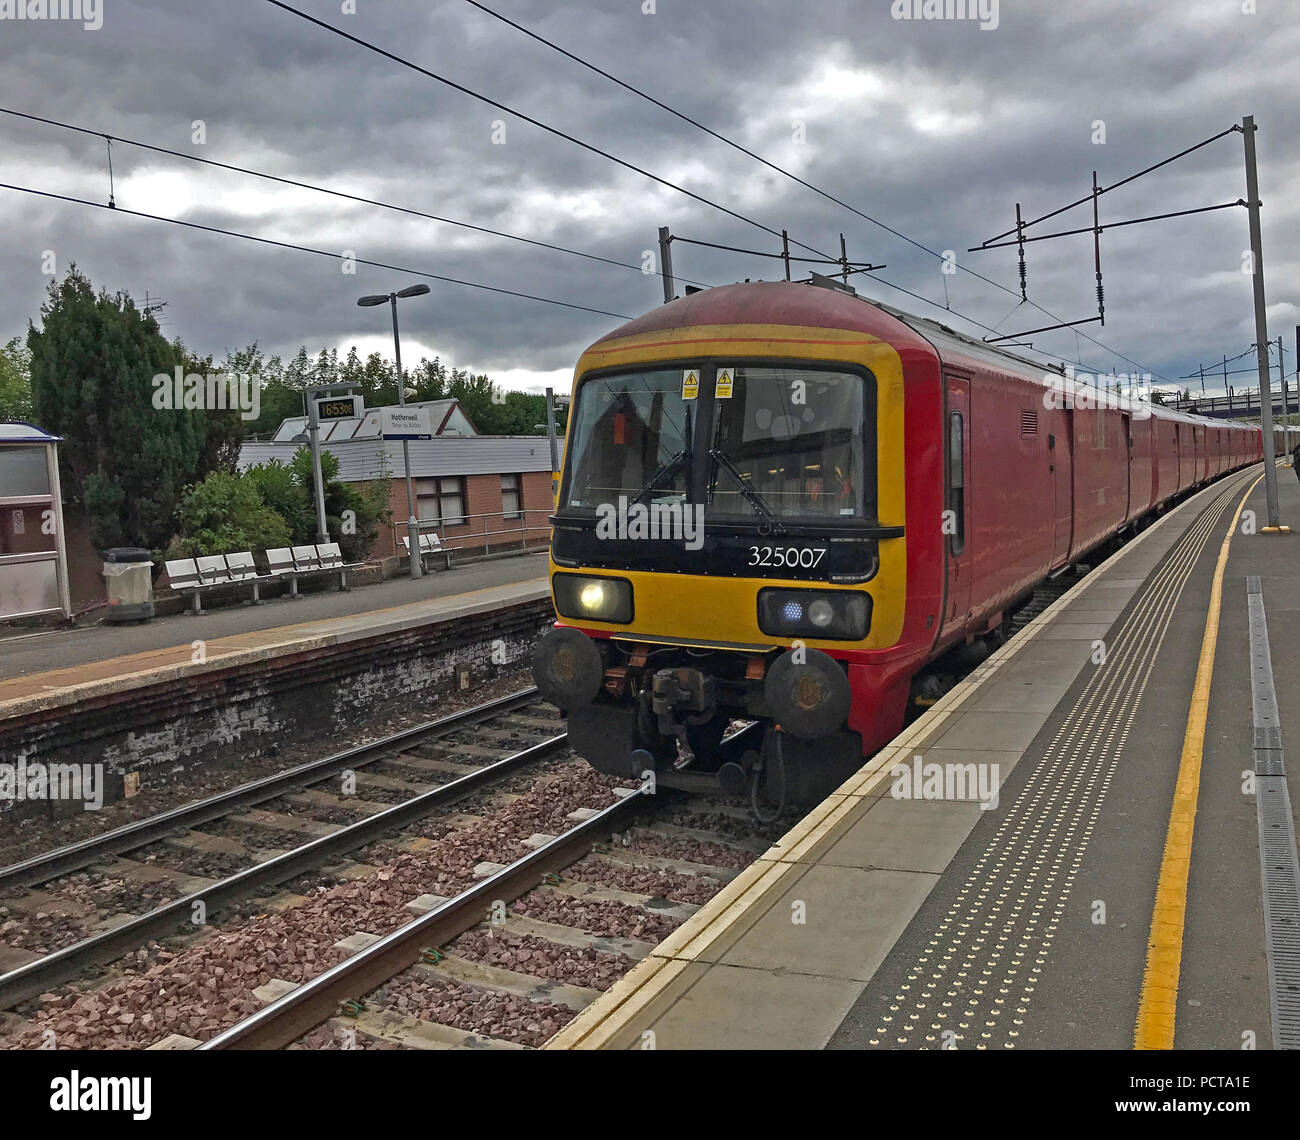 Red Royal Mail Train, 325007, at platform, Motherwell Station, North Lanarkshire, Scotland, UK Stock Photo